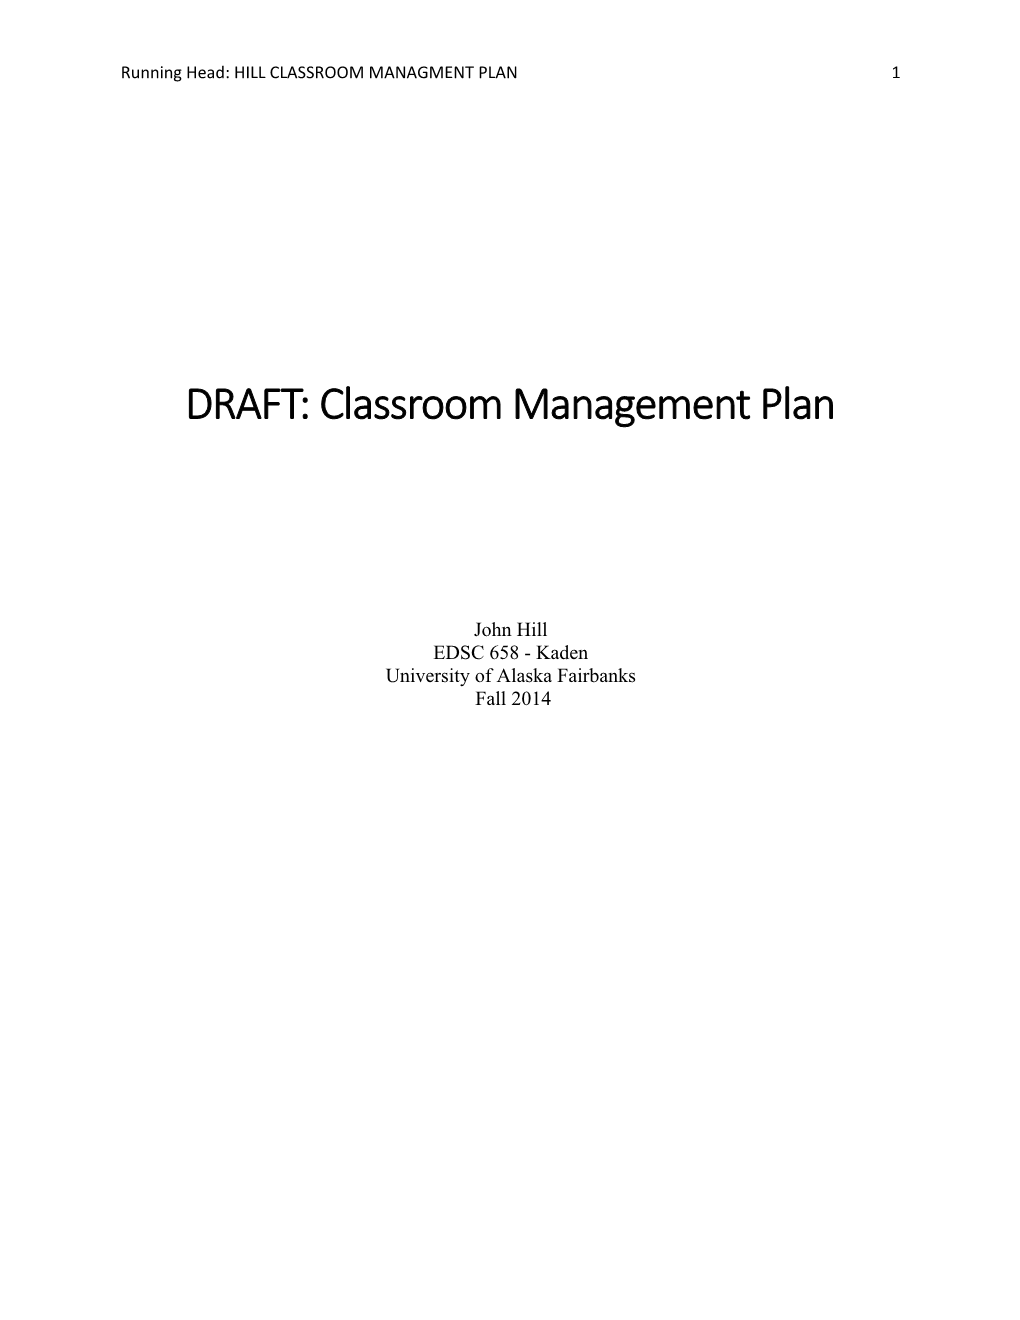 Hill Classroom Managment Plan 1